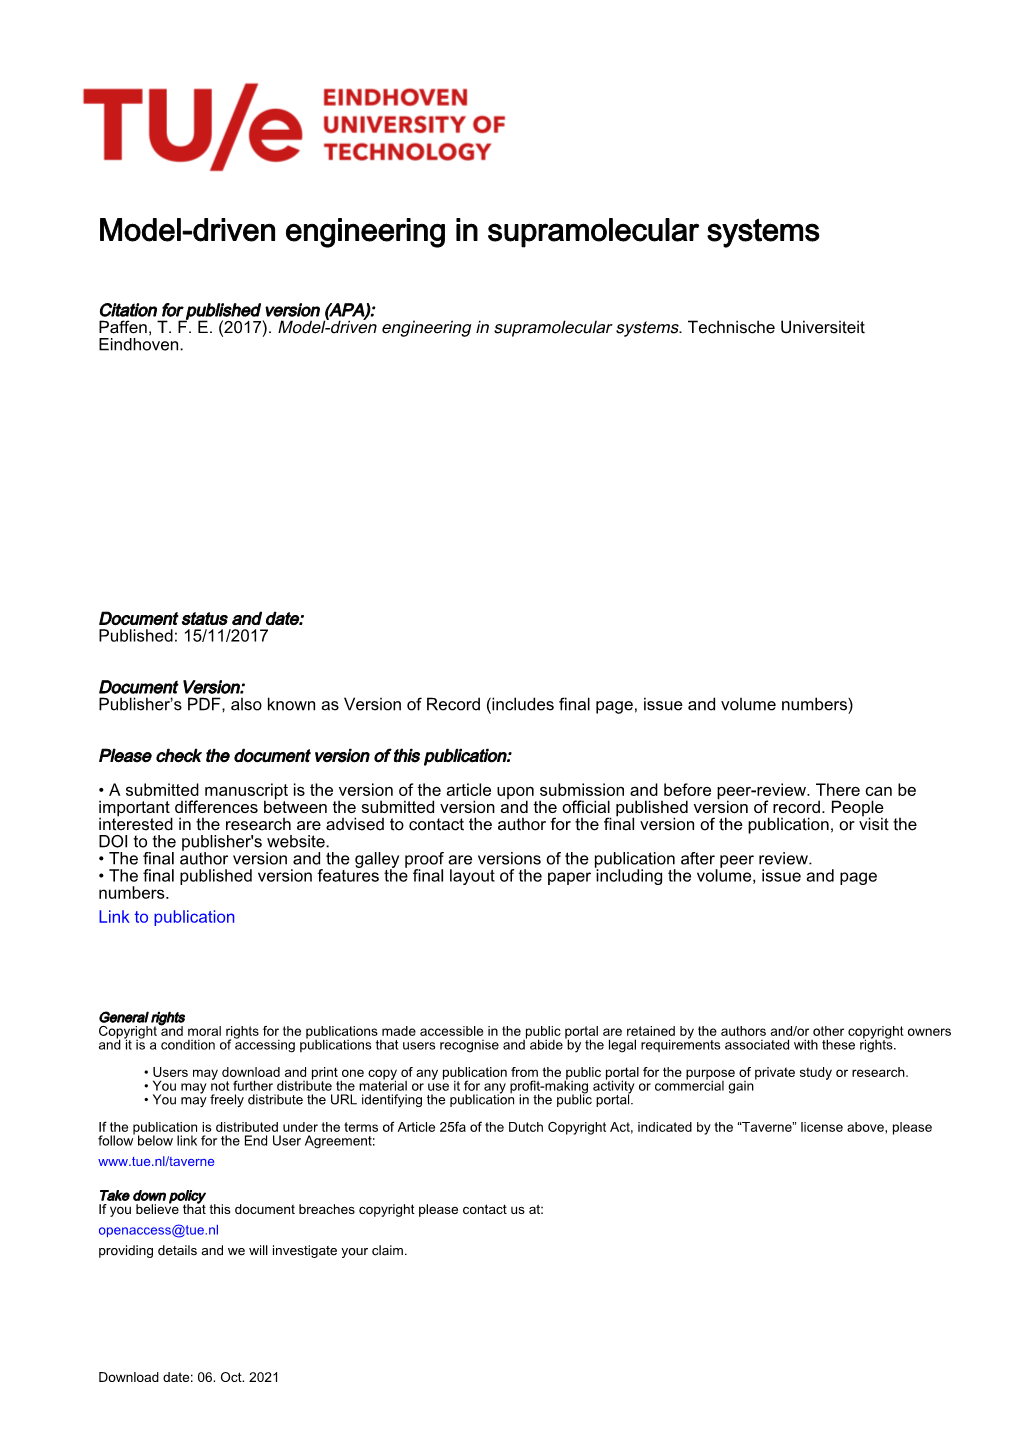 Model-Driven Engineering in Supramolecular Systems